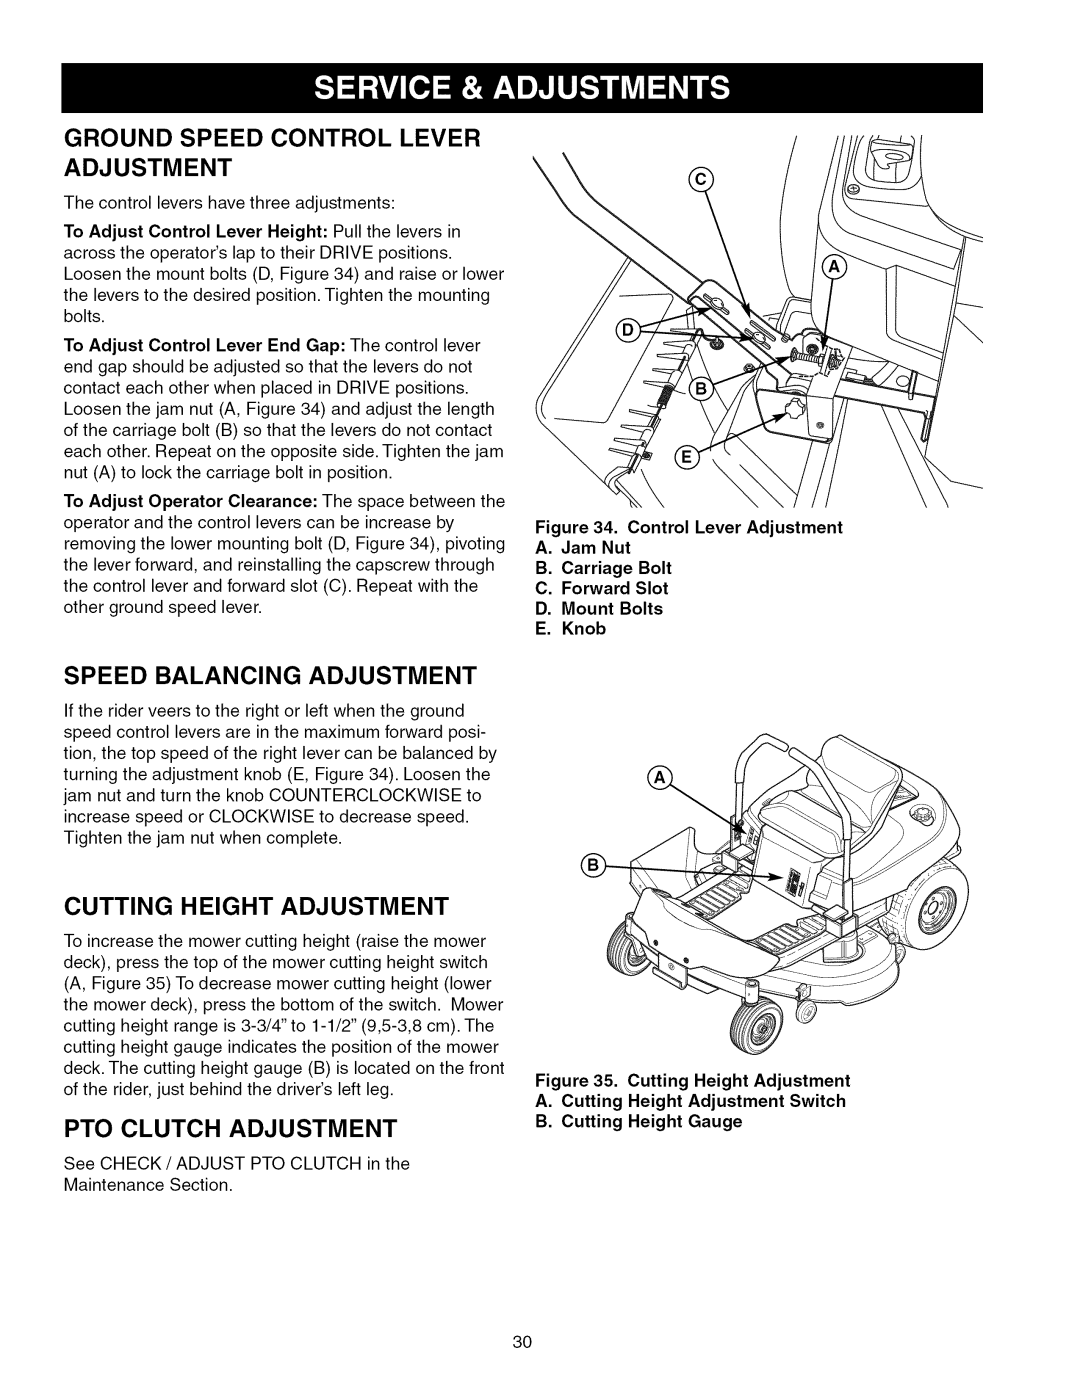 Craftsman ZTS 6000 Ground Speed Control Lever Adjustment, Speed Balancing Adjustment, Cutting Height Adjustment, E. Knob 